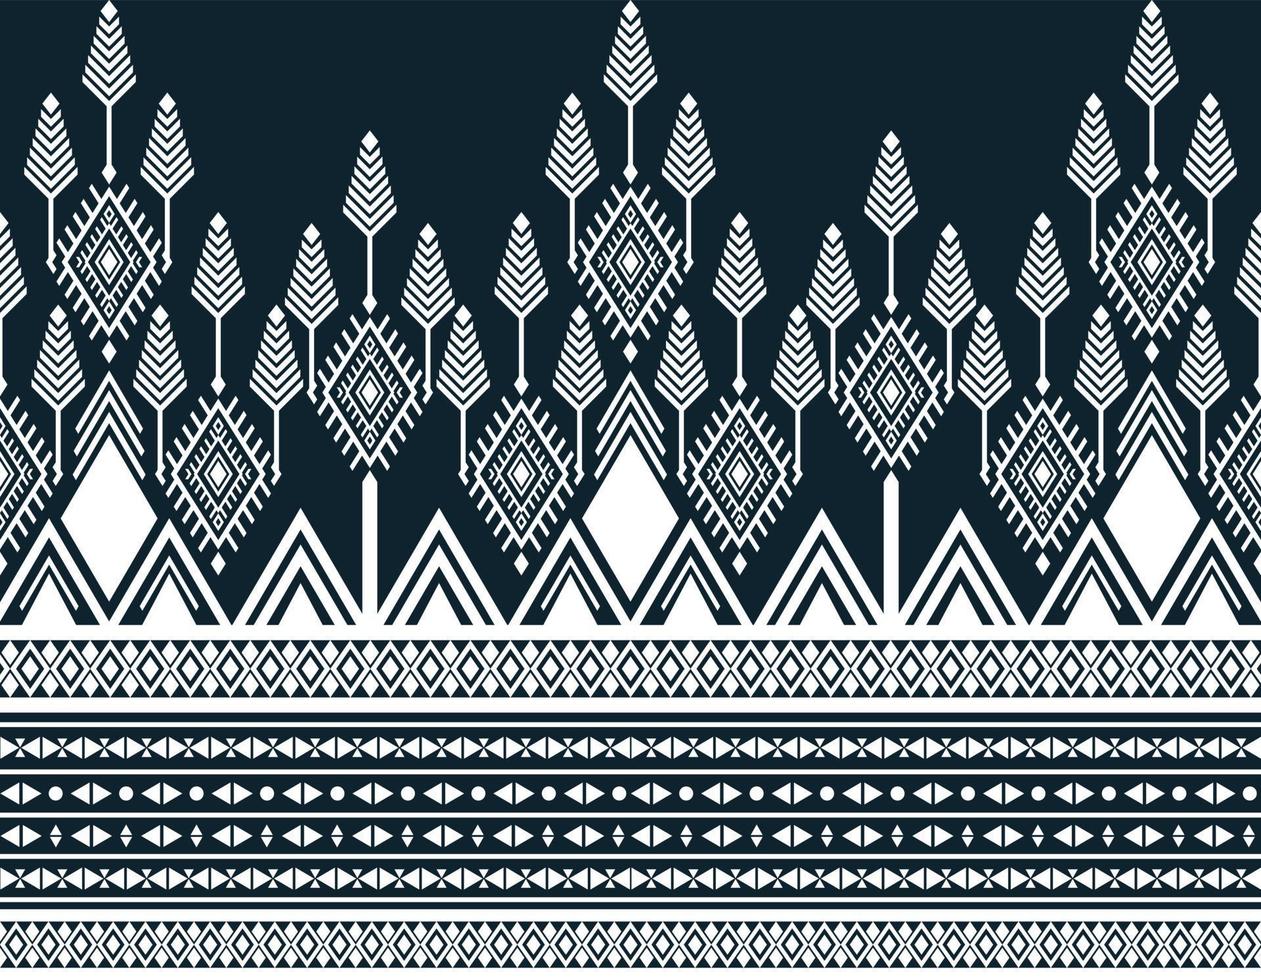 Pattern Ethnic fabric texture Geometric Vector Aztec oriental illustration retro ceramic tile